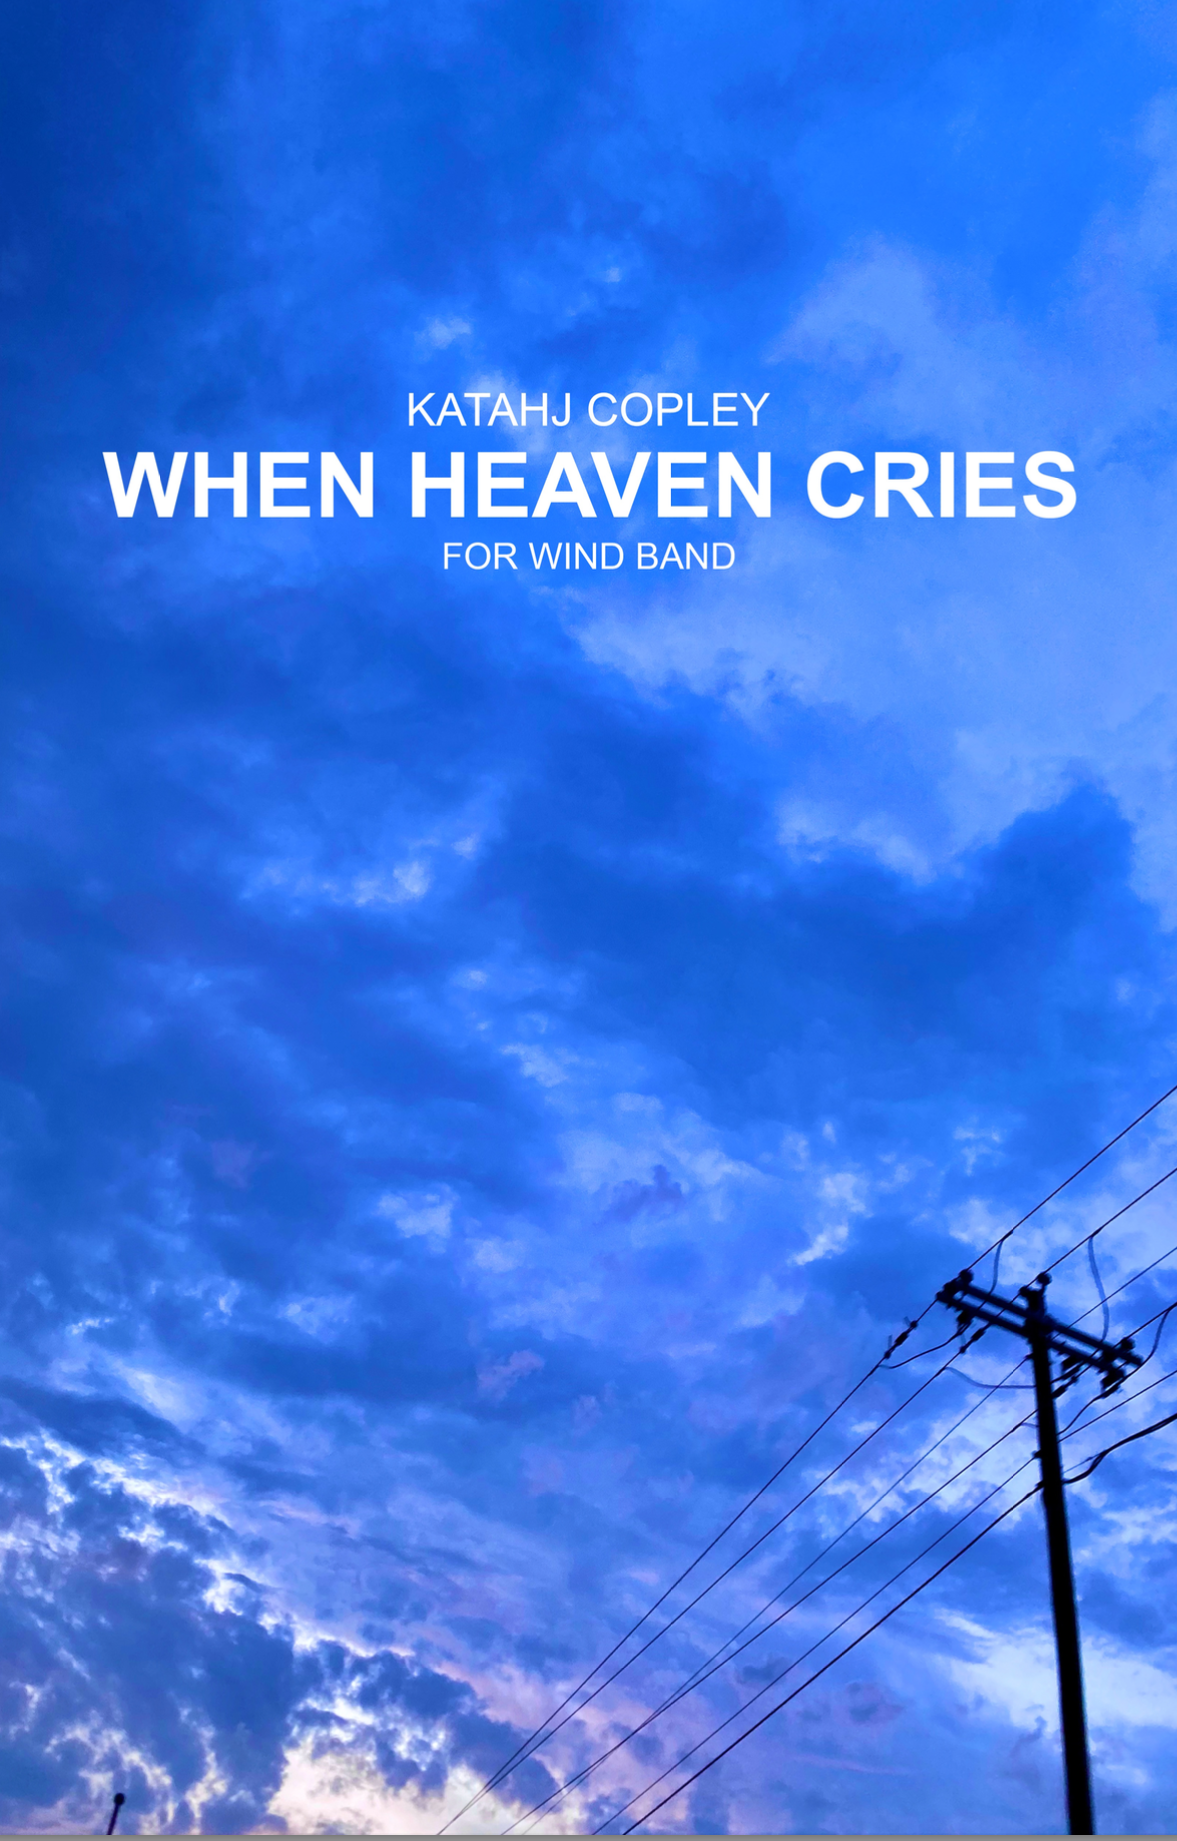 When Heaven Cries by Katahj Copley